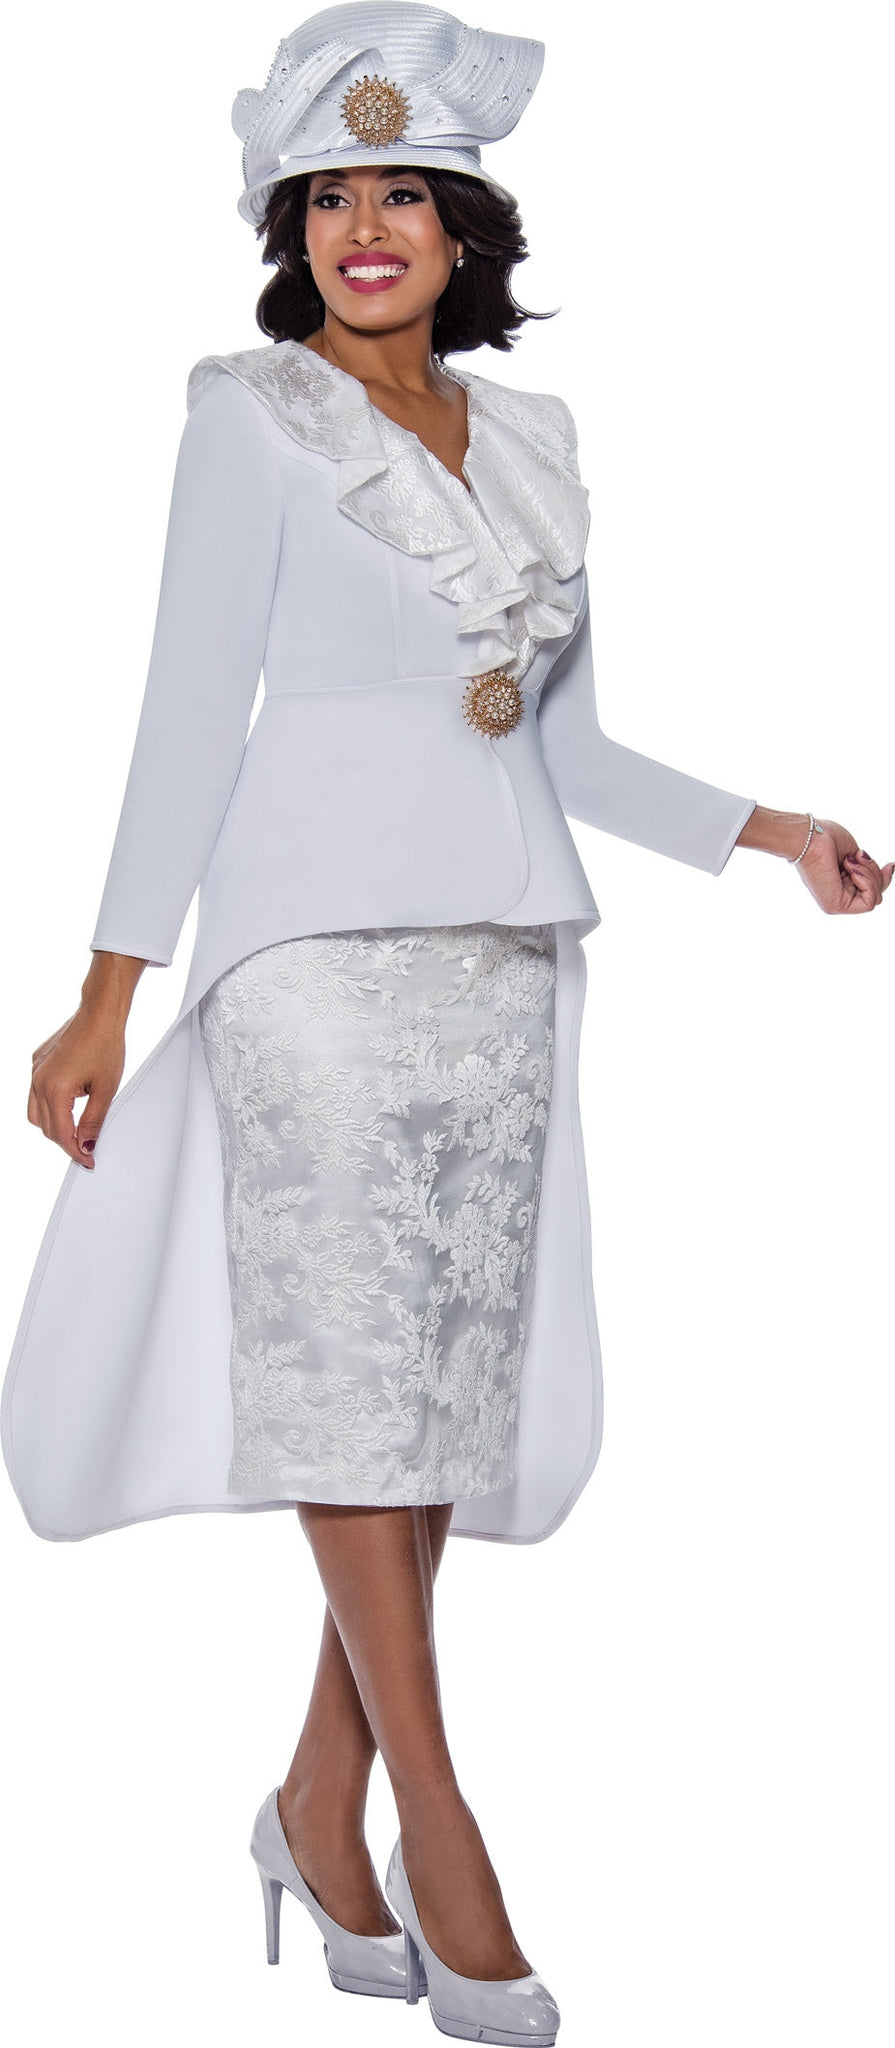 GMI Church Suit 9182C-White | Church suits for less